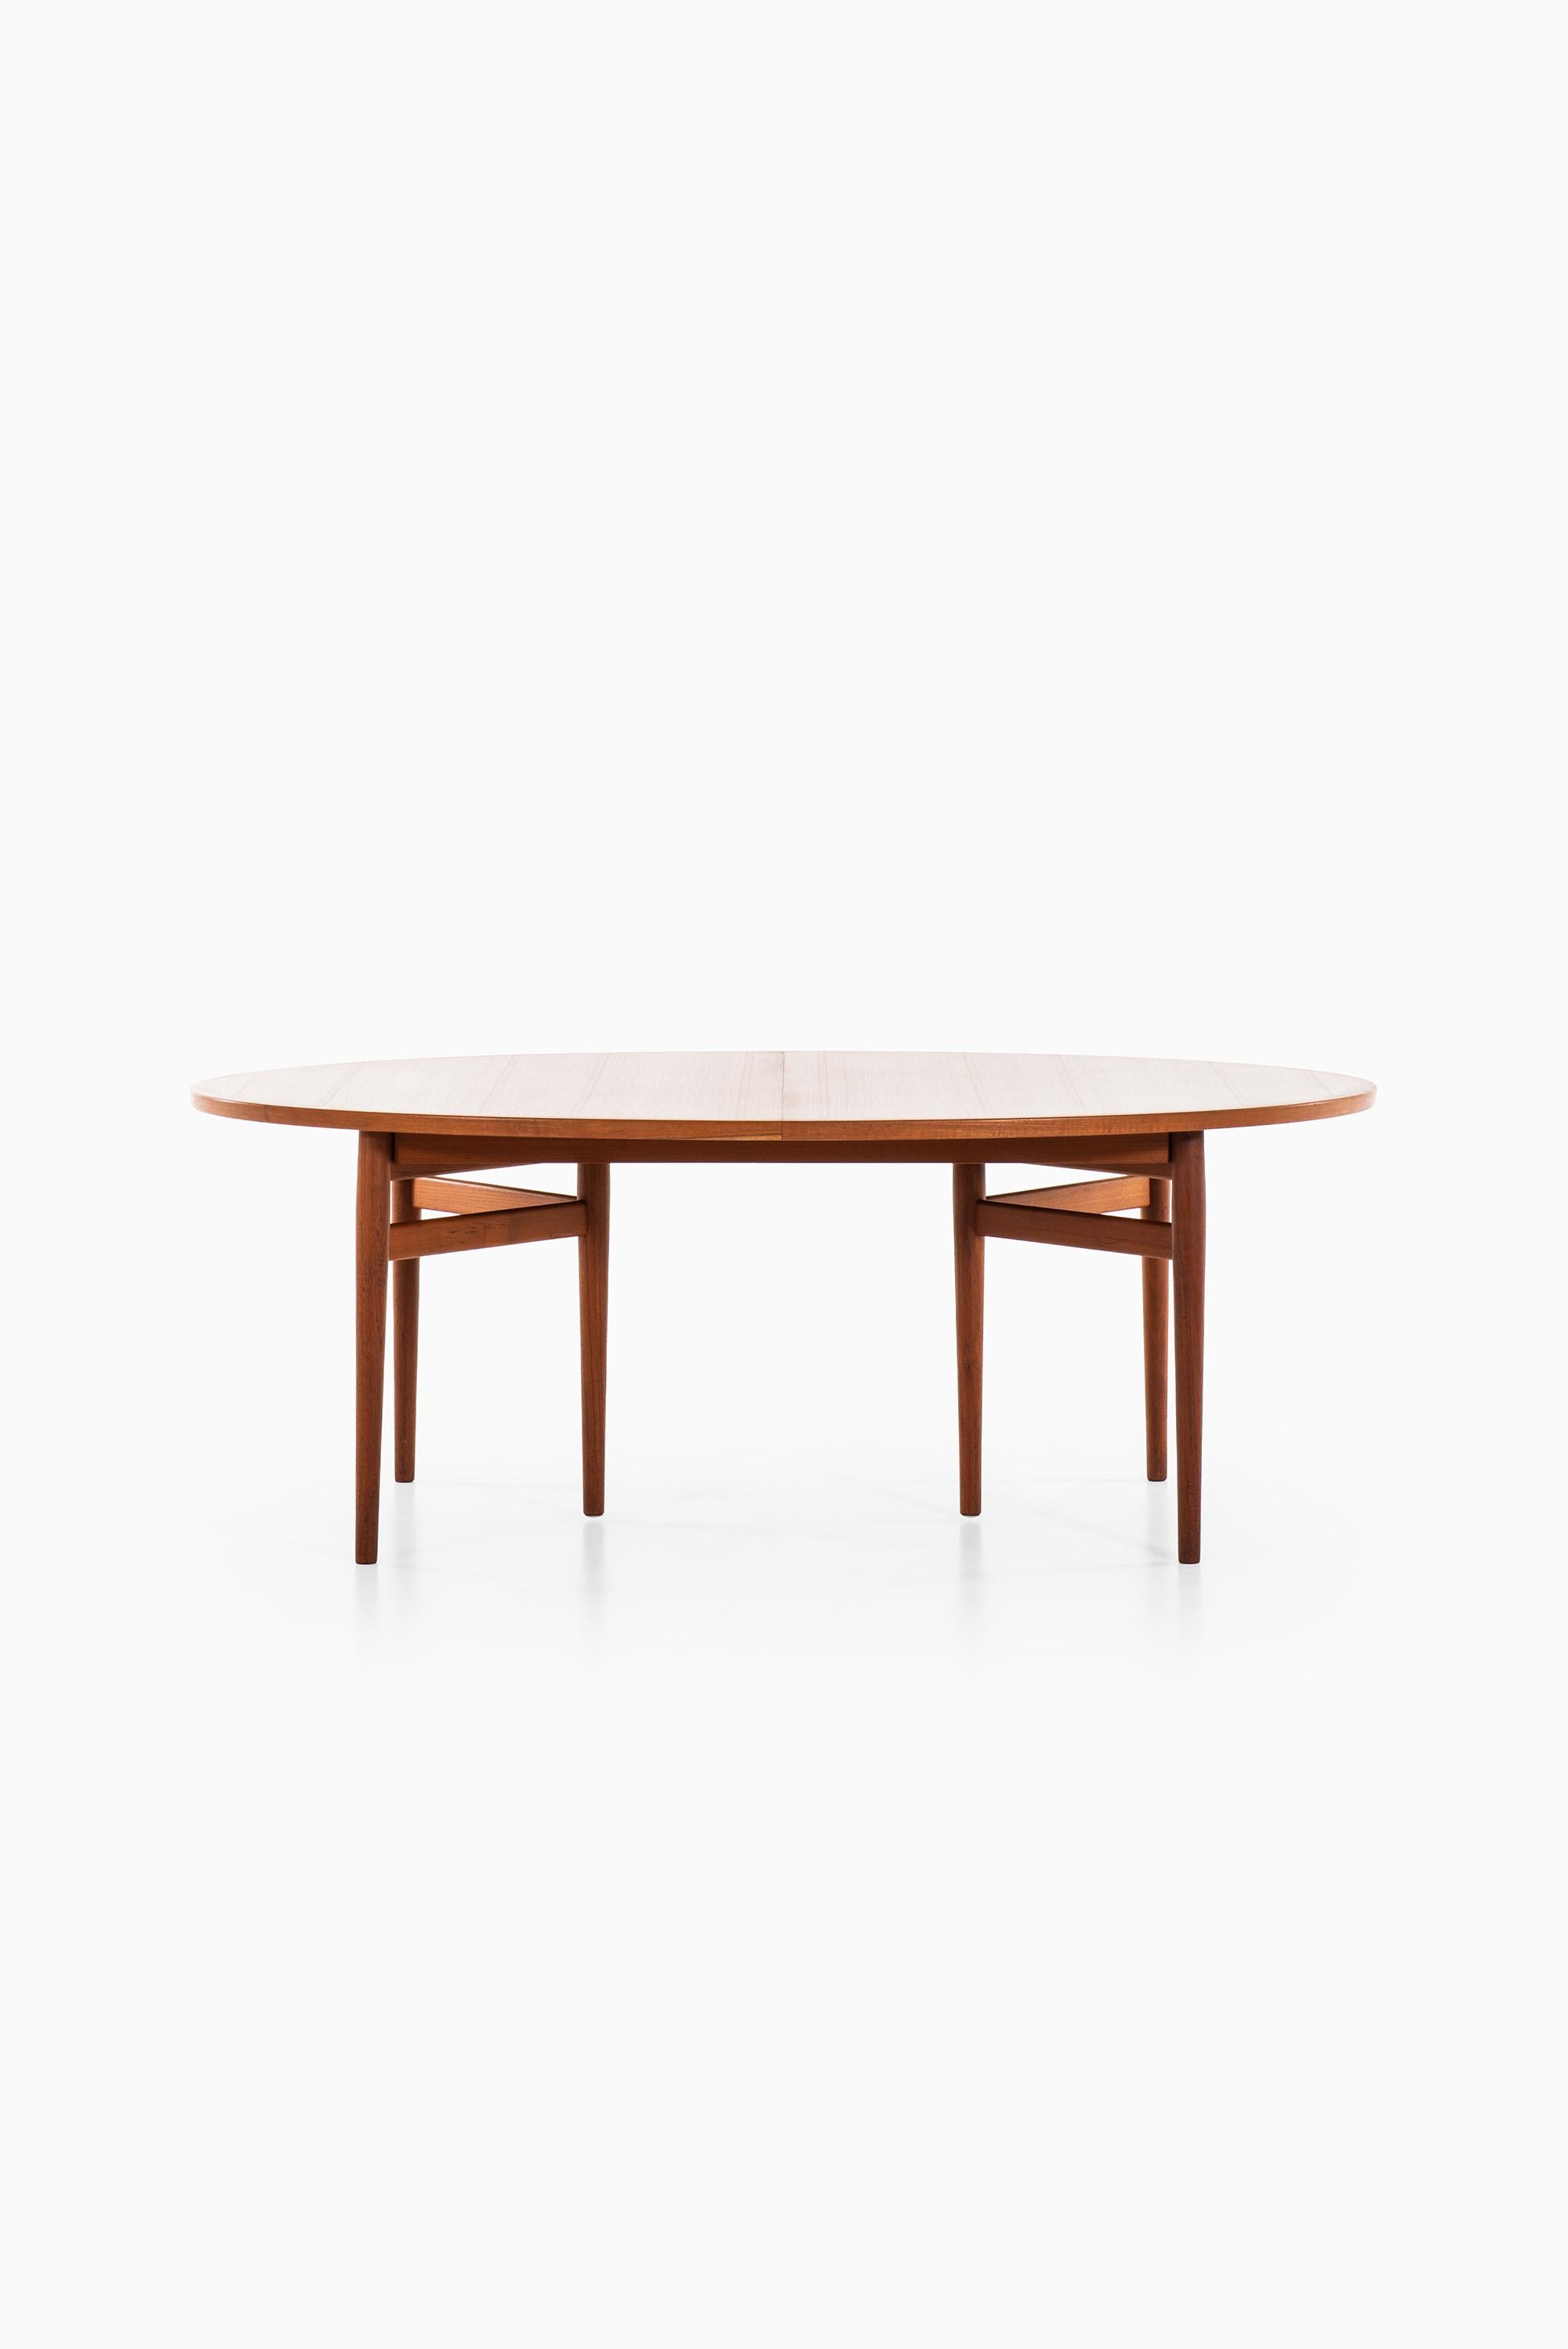 Rare dining table model 212 designed by Arne Vodder. Produced by Sibast møbelfabrik in Denmark.